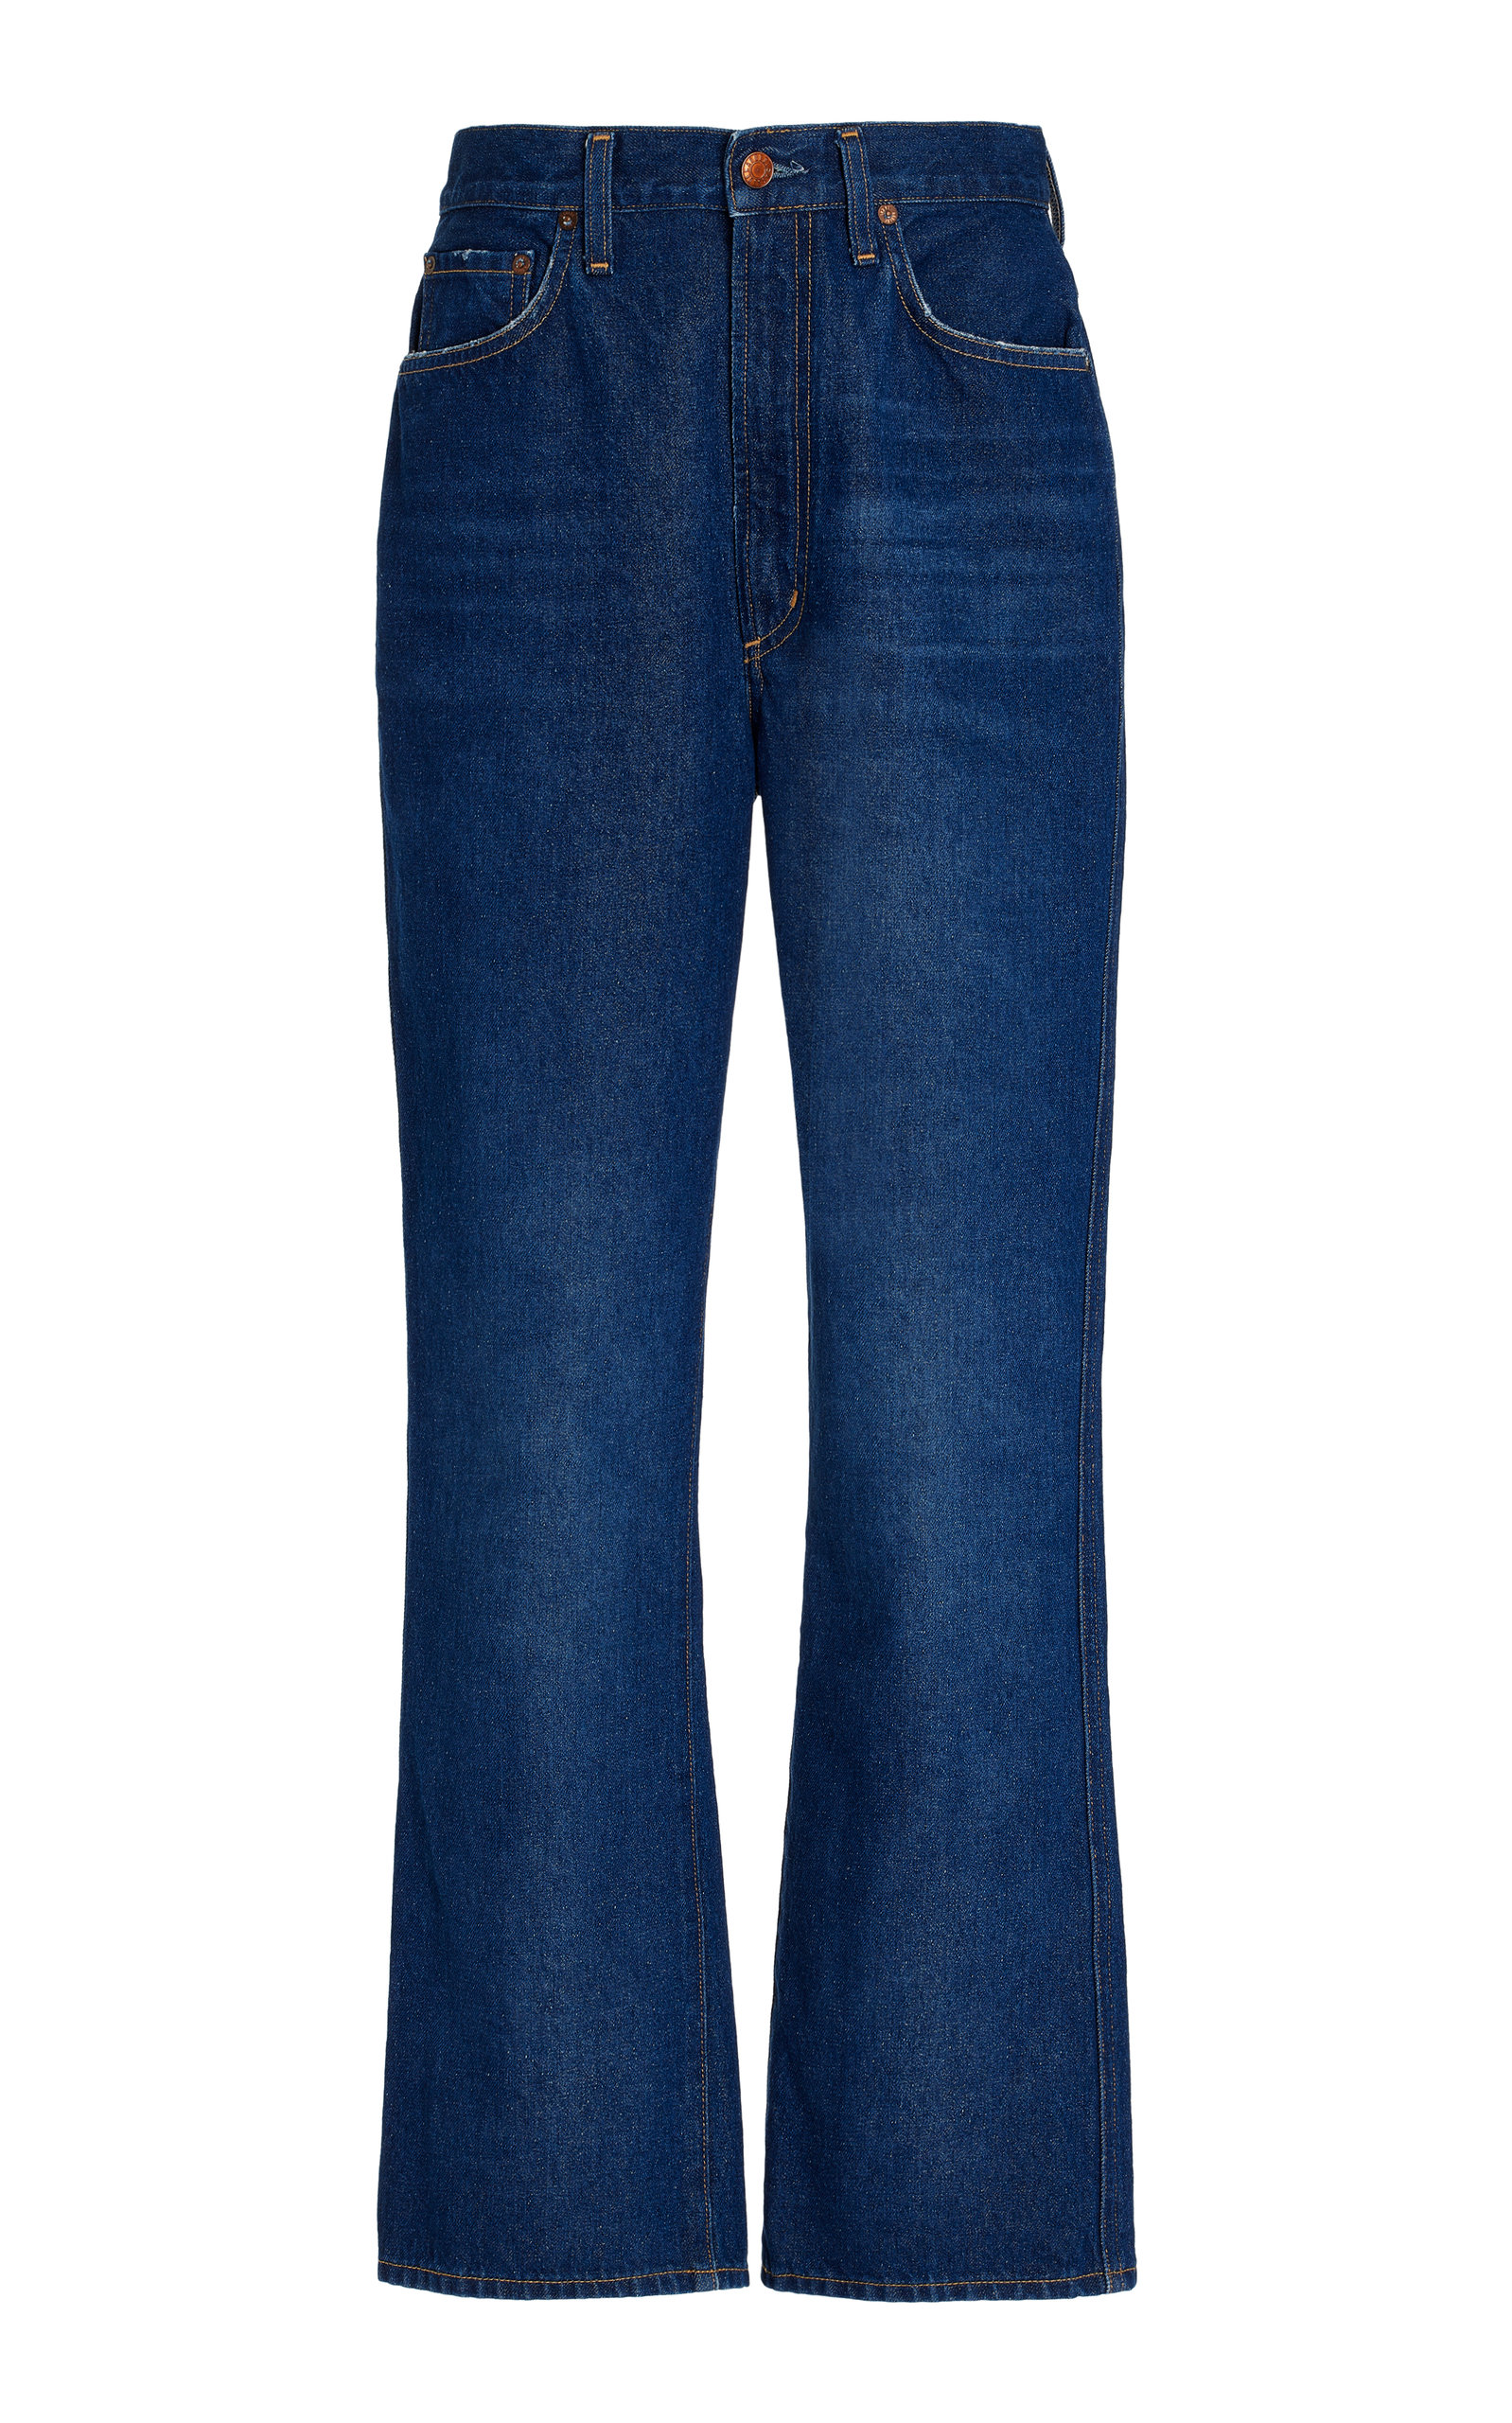 Agolde - Women's Rigid Pinch-Waist Kick Flare Cropped Jeans - Medium Wash - 23 - Moda Operandi